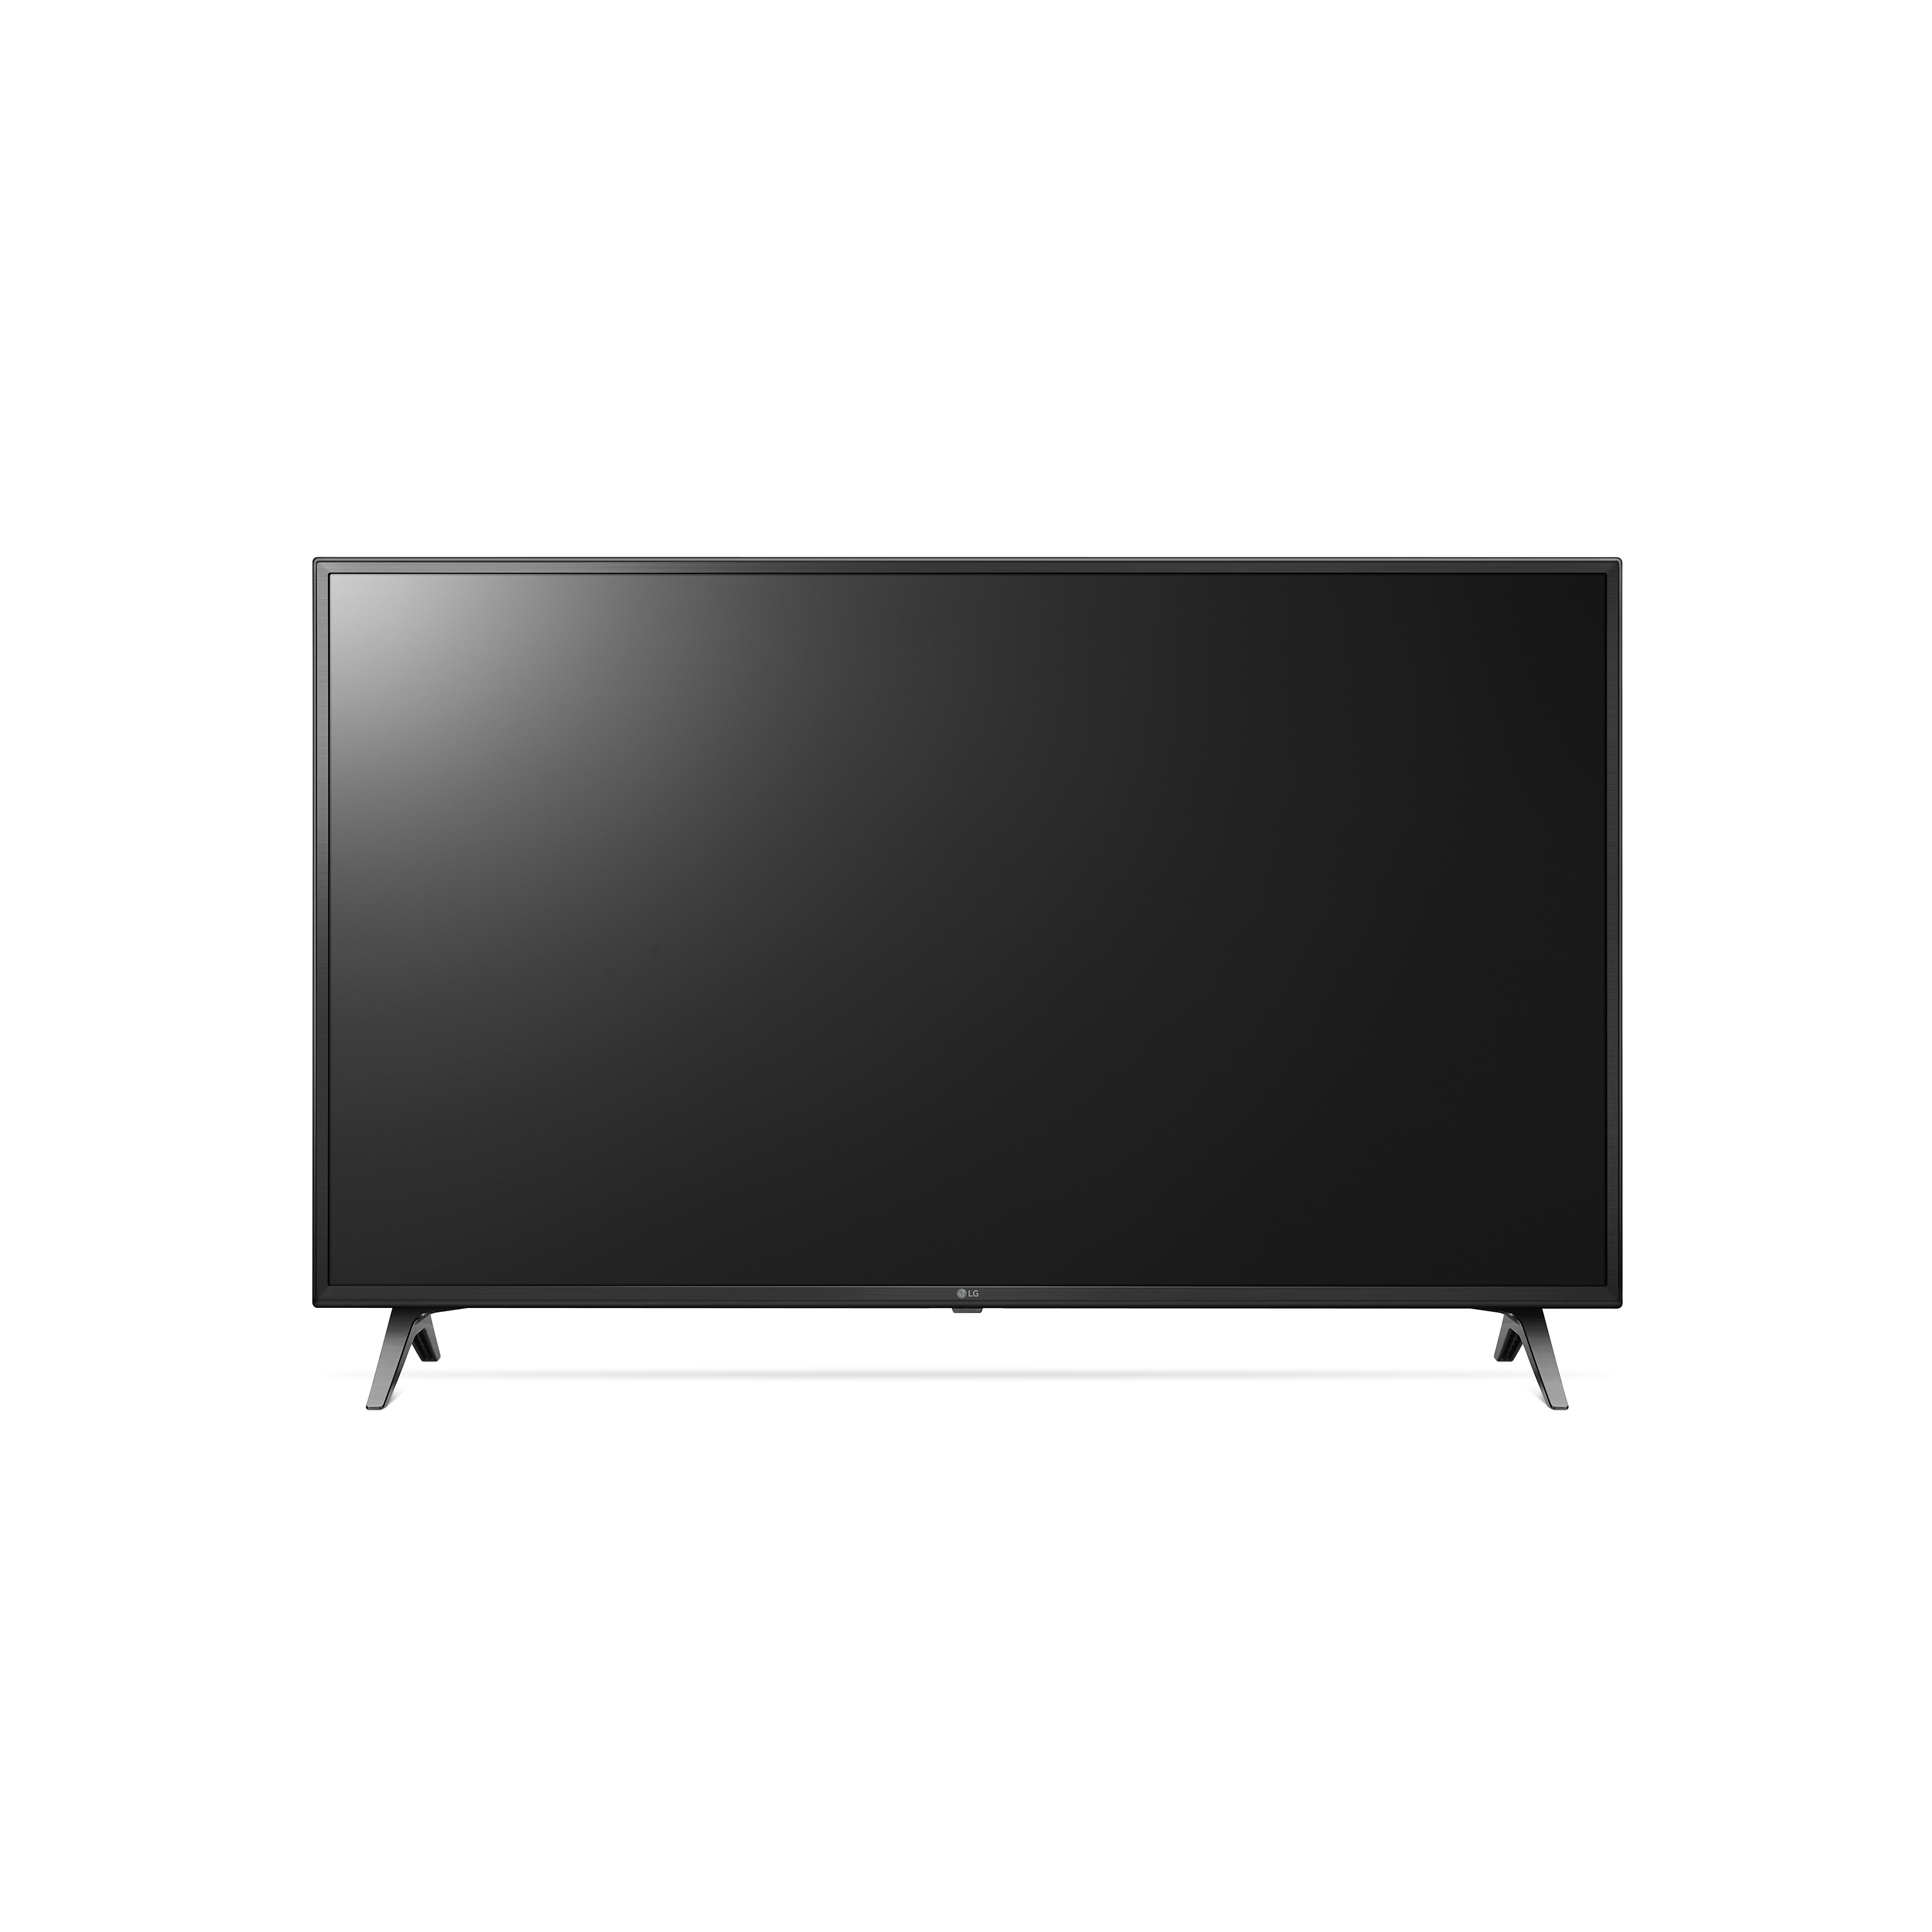 LG 60" Class 4K UHD 2160p LED Smart TV With HDR 60UM6900PUA - image 10 of 14